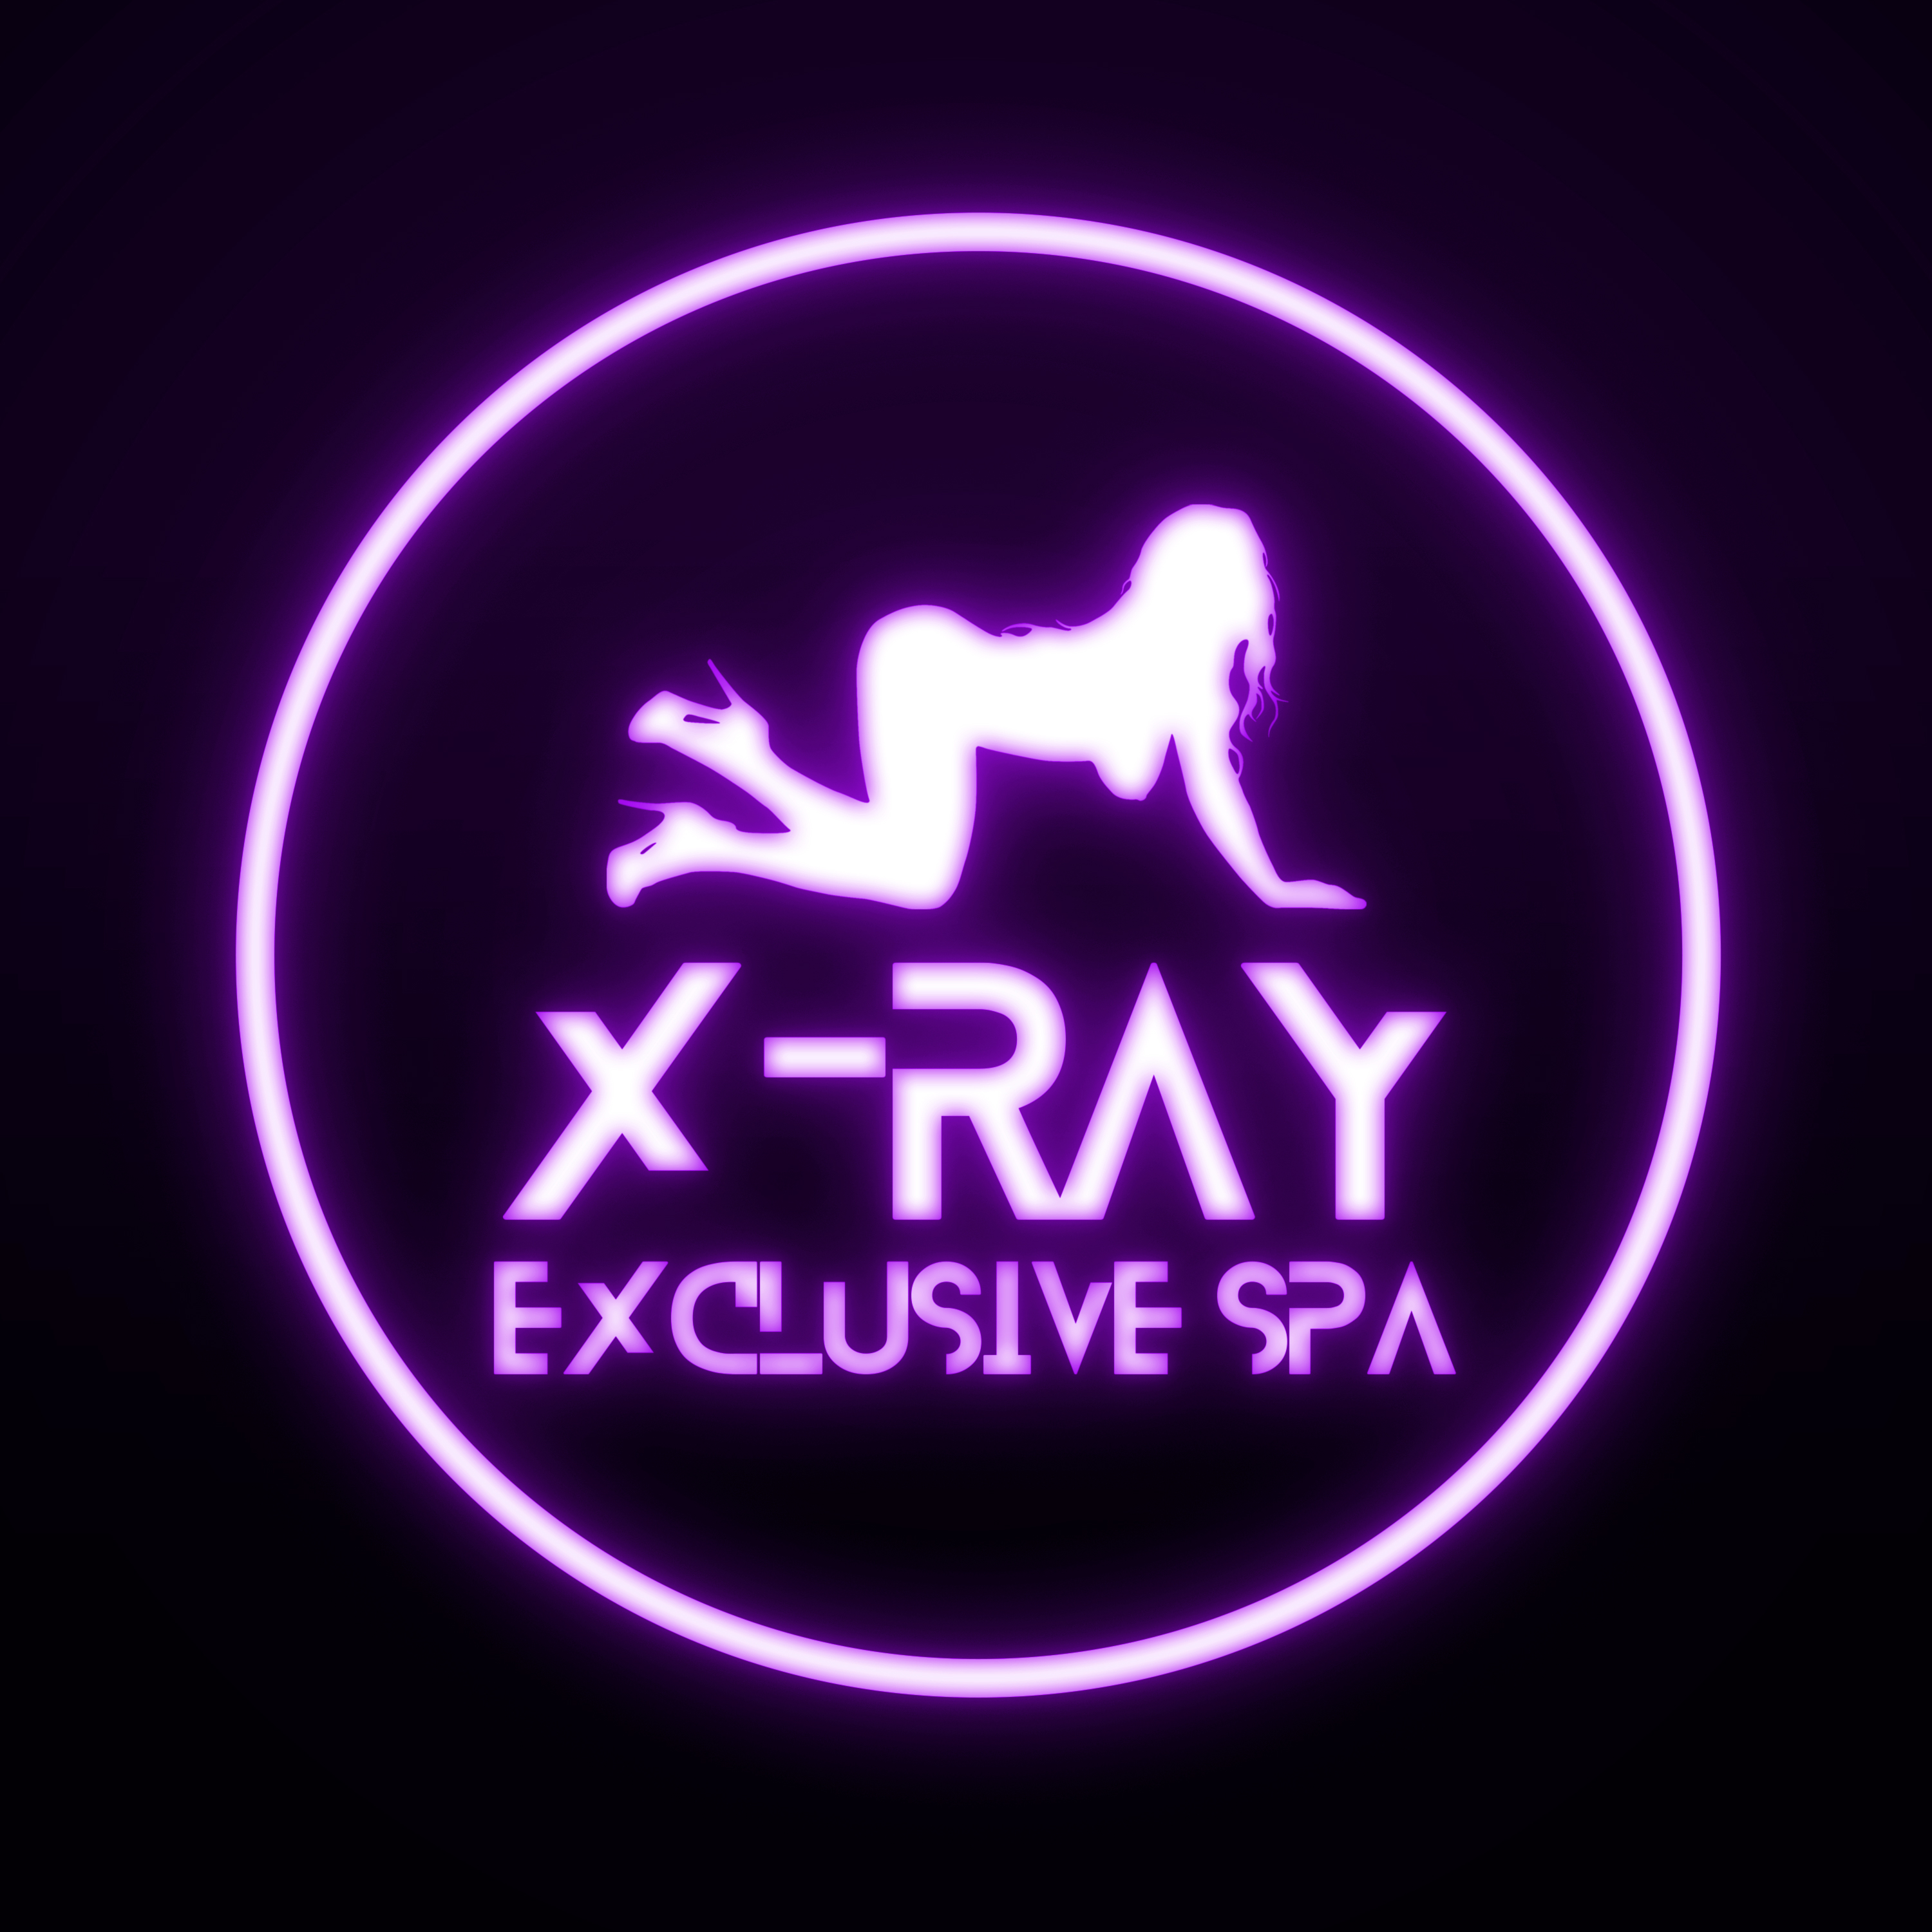 X-Ray Executive Spa@ タイ・バンコクNO.1風俗ポータルサイト「How?」